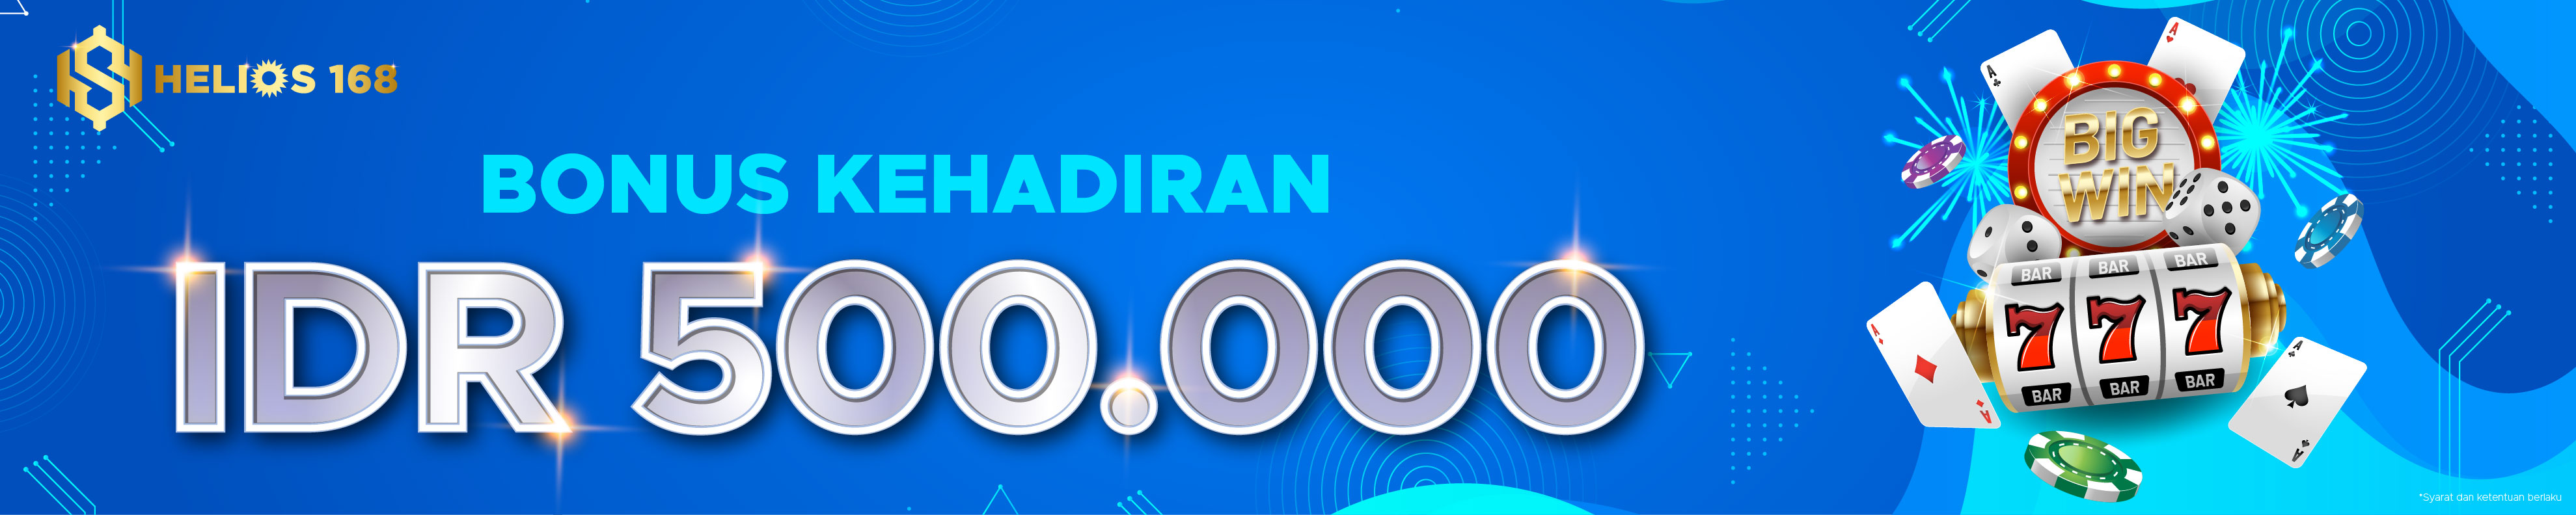 BONUS KEHADIRAN 500.000 HELIOS168